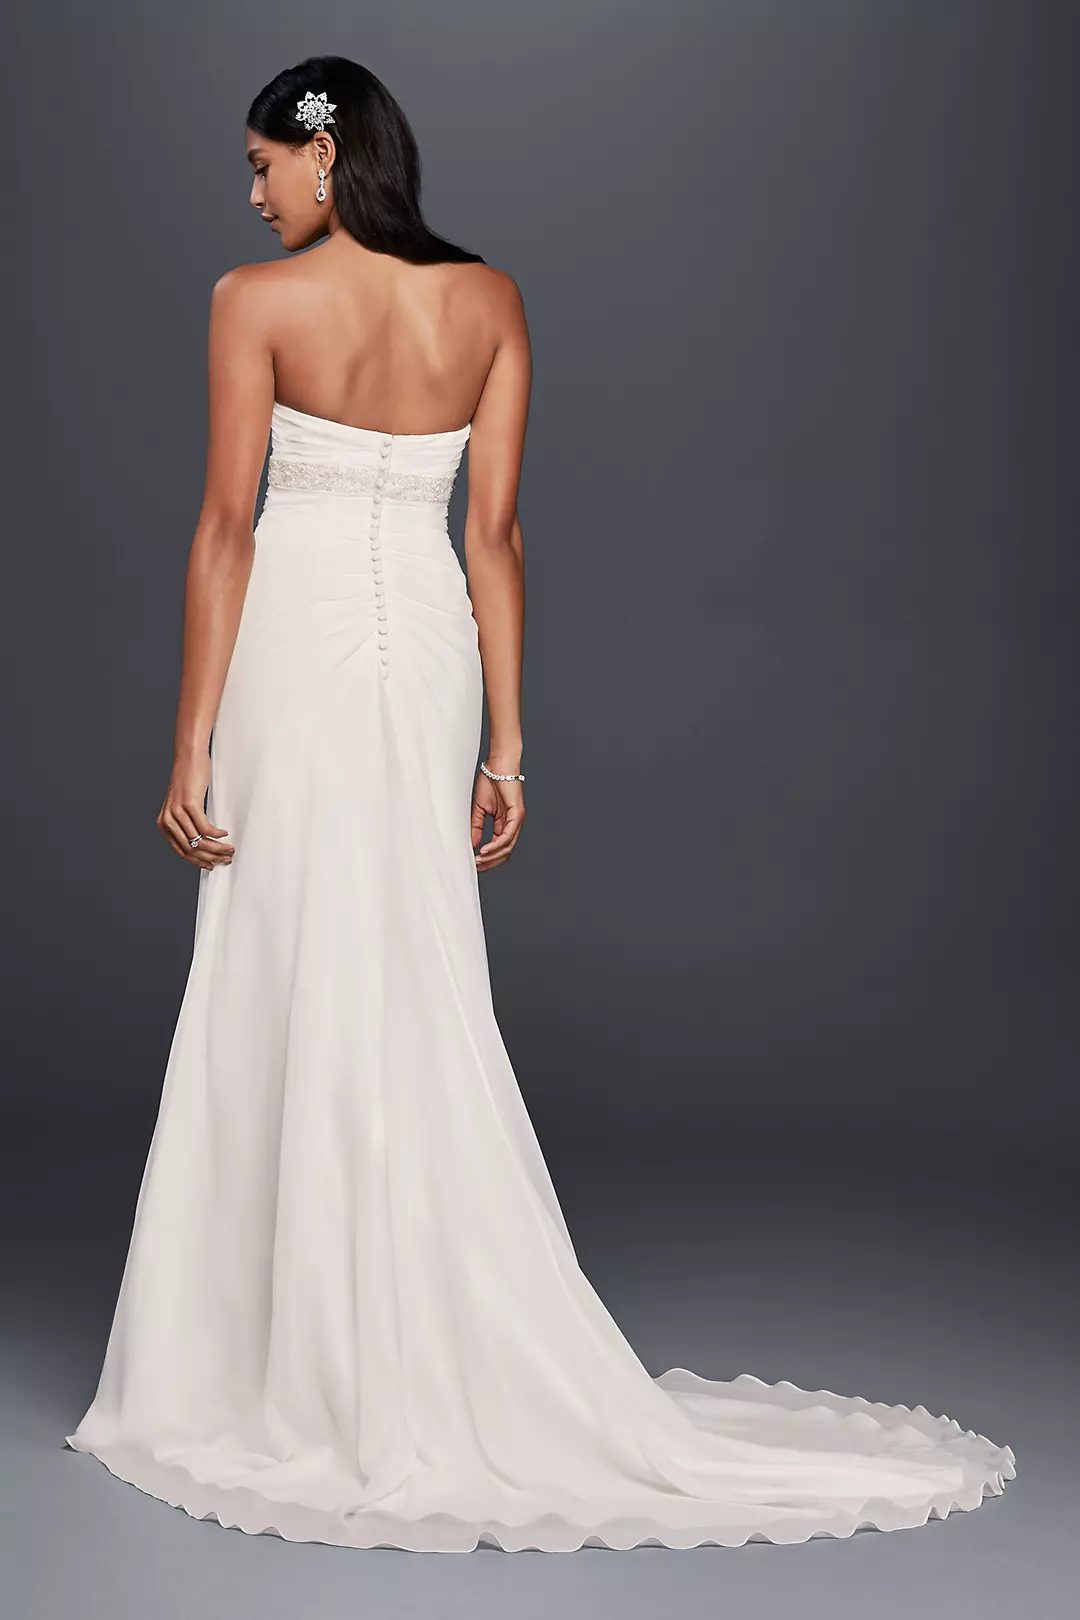 A-Line Wedding Dress with Beaded Empire Waist | David's Bridal